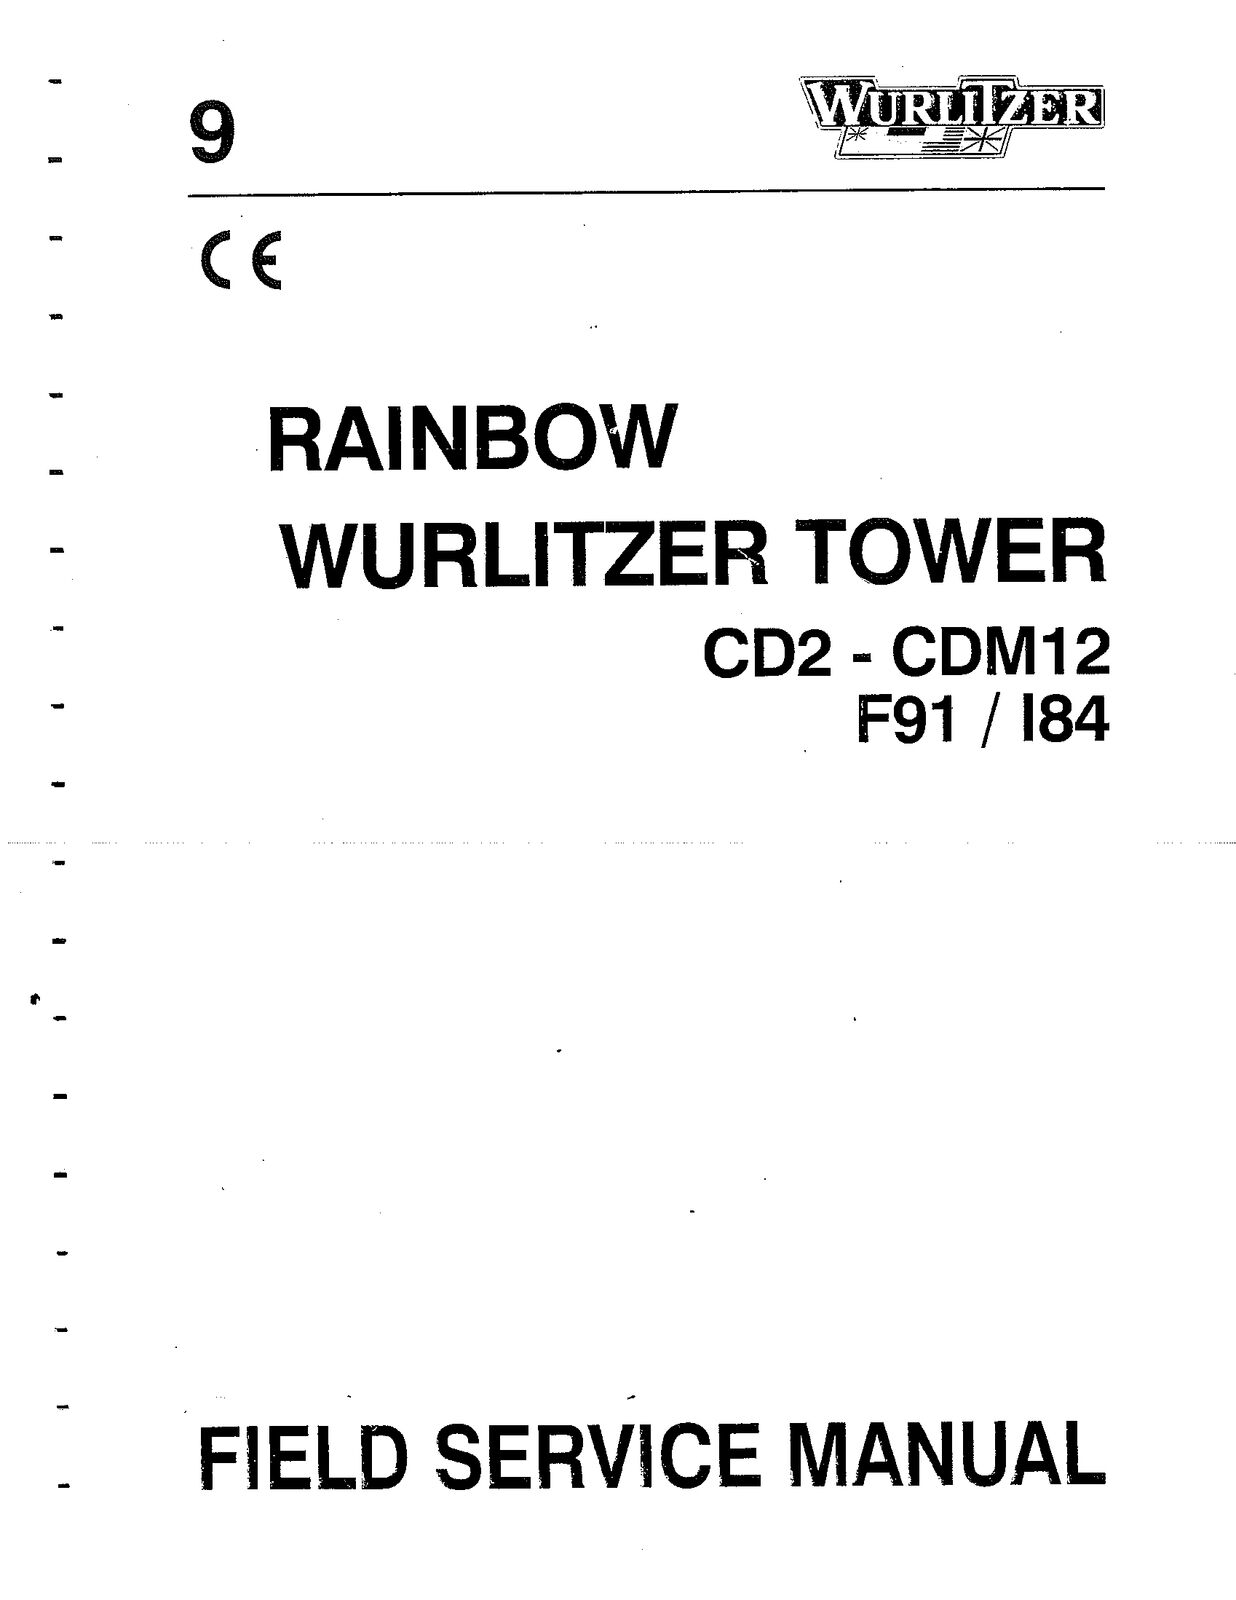 German Wurlitzer Rainbow Cd Jukebox Manual On Cd